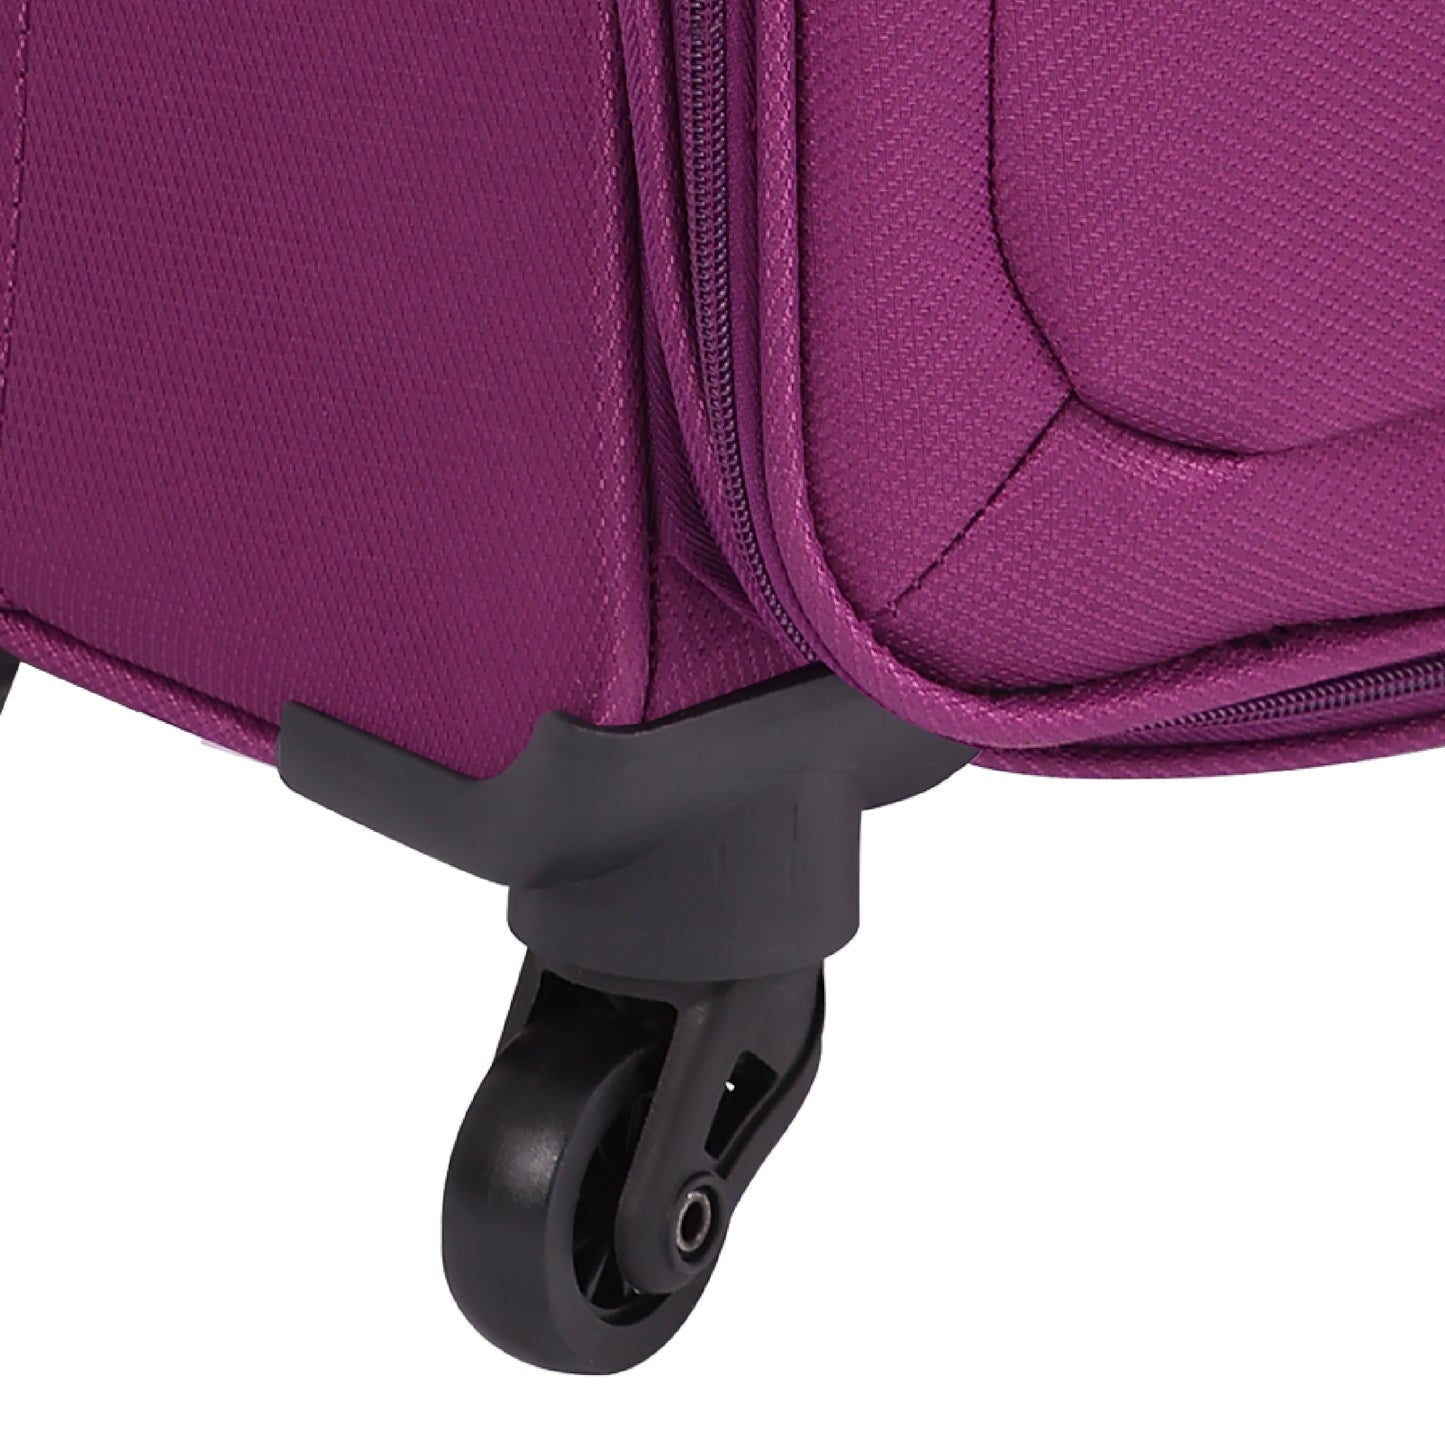 Cosmo Travelite 4W 50 cm Soft Luggage Trolley Case